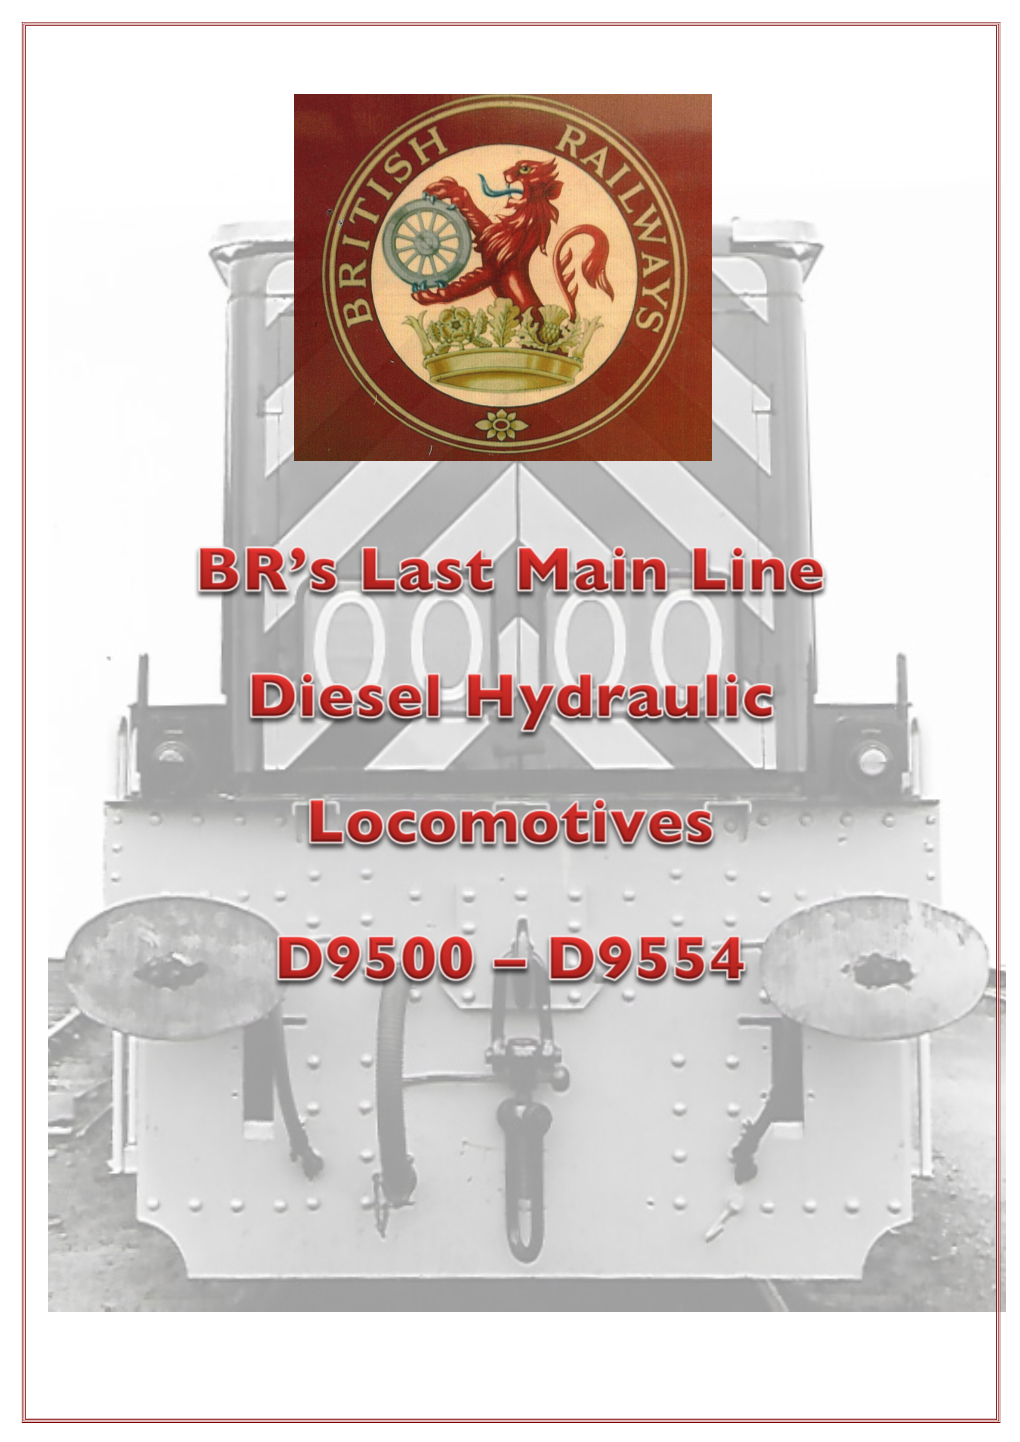 Brs-Last-Main-Line-Diesel-Hydraulic